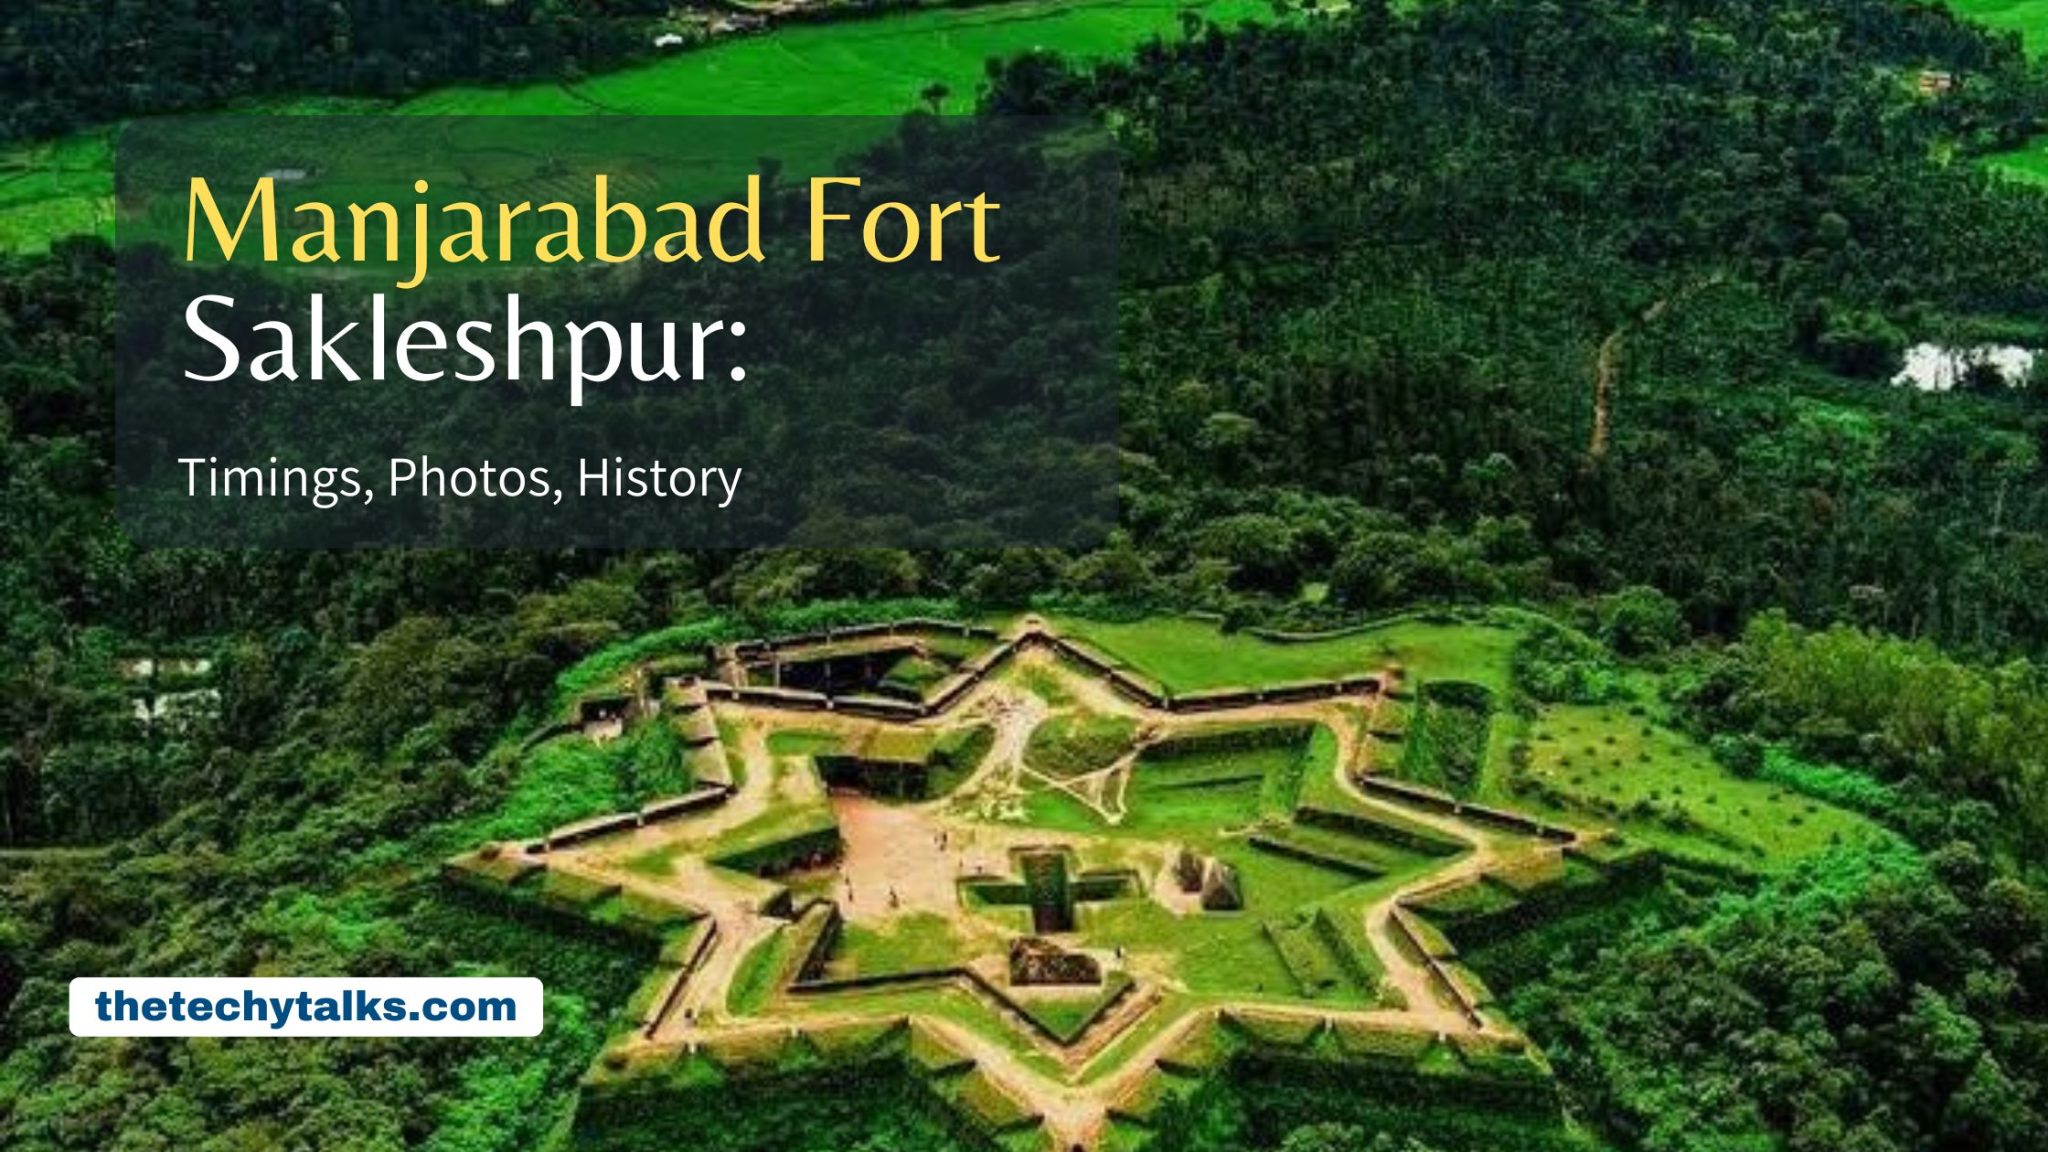 Manjarabad Fort Sakleshpur: Timings, Photos, History